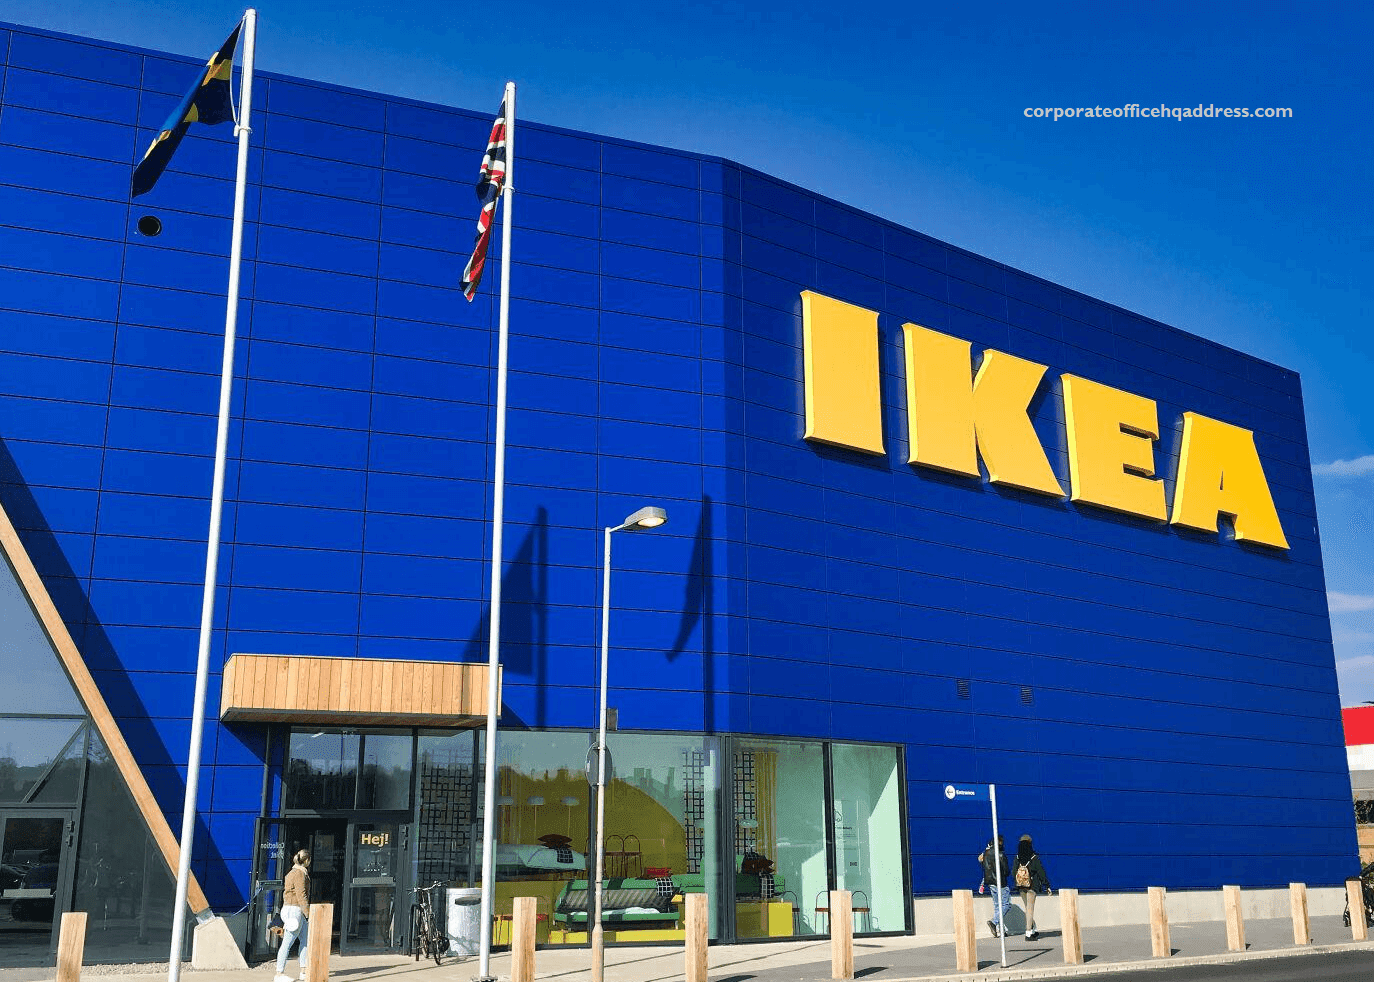 IKEA Corporate Office Headquarters (Address/Phone Number/E-Mail id)